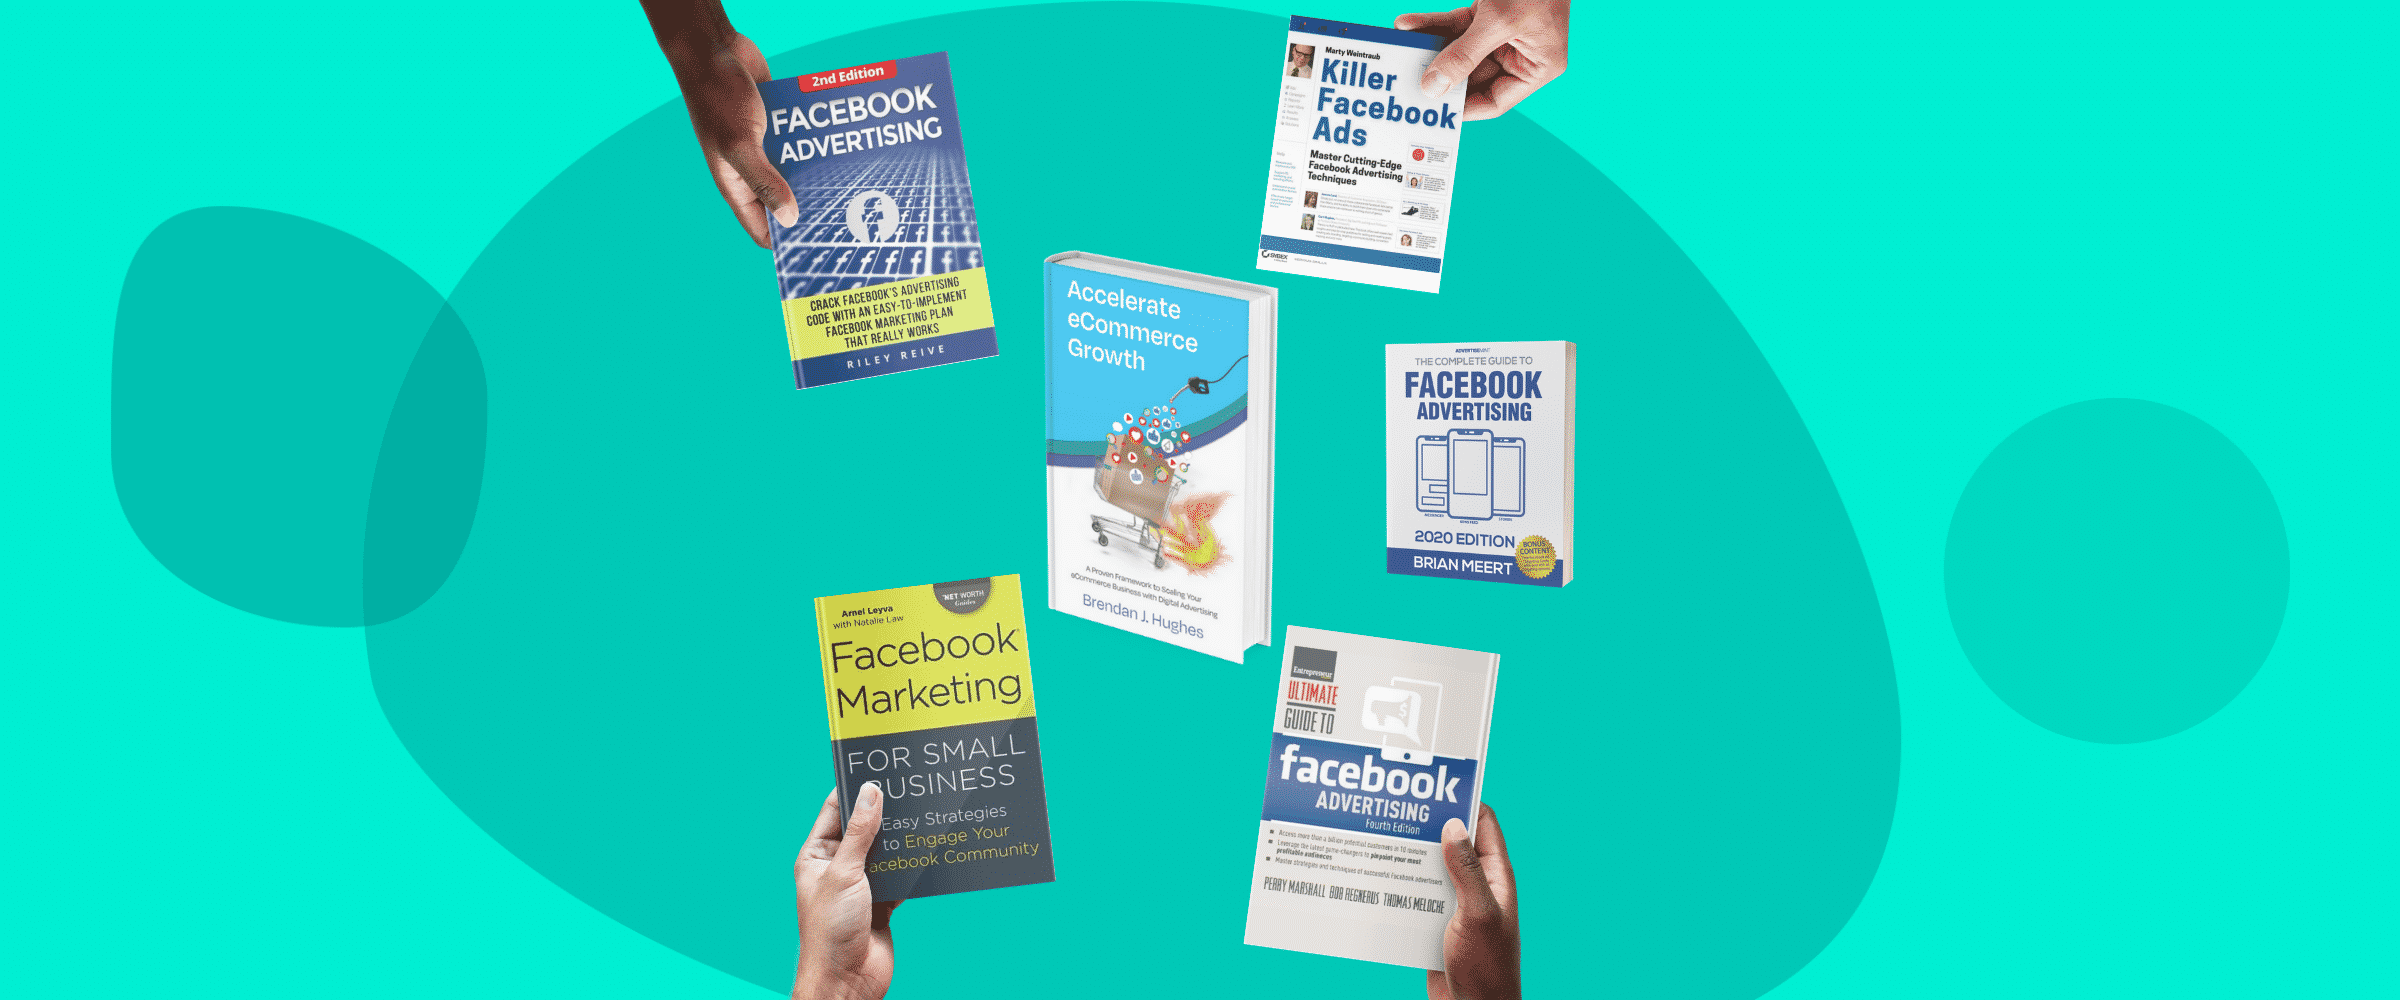 Top 6 Facebook Advertising Books 2021